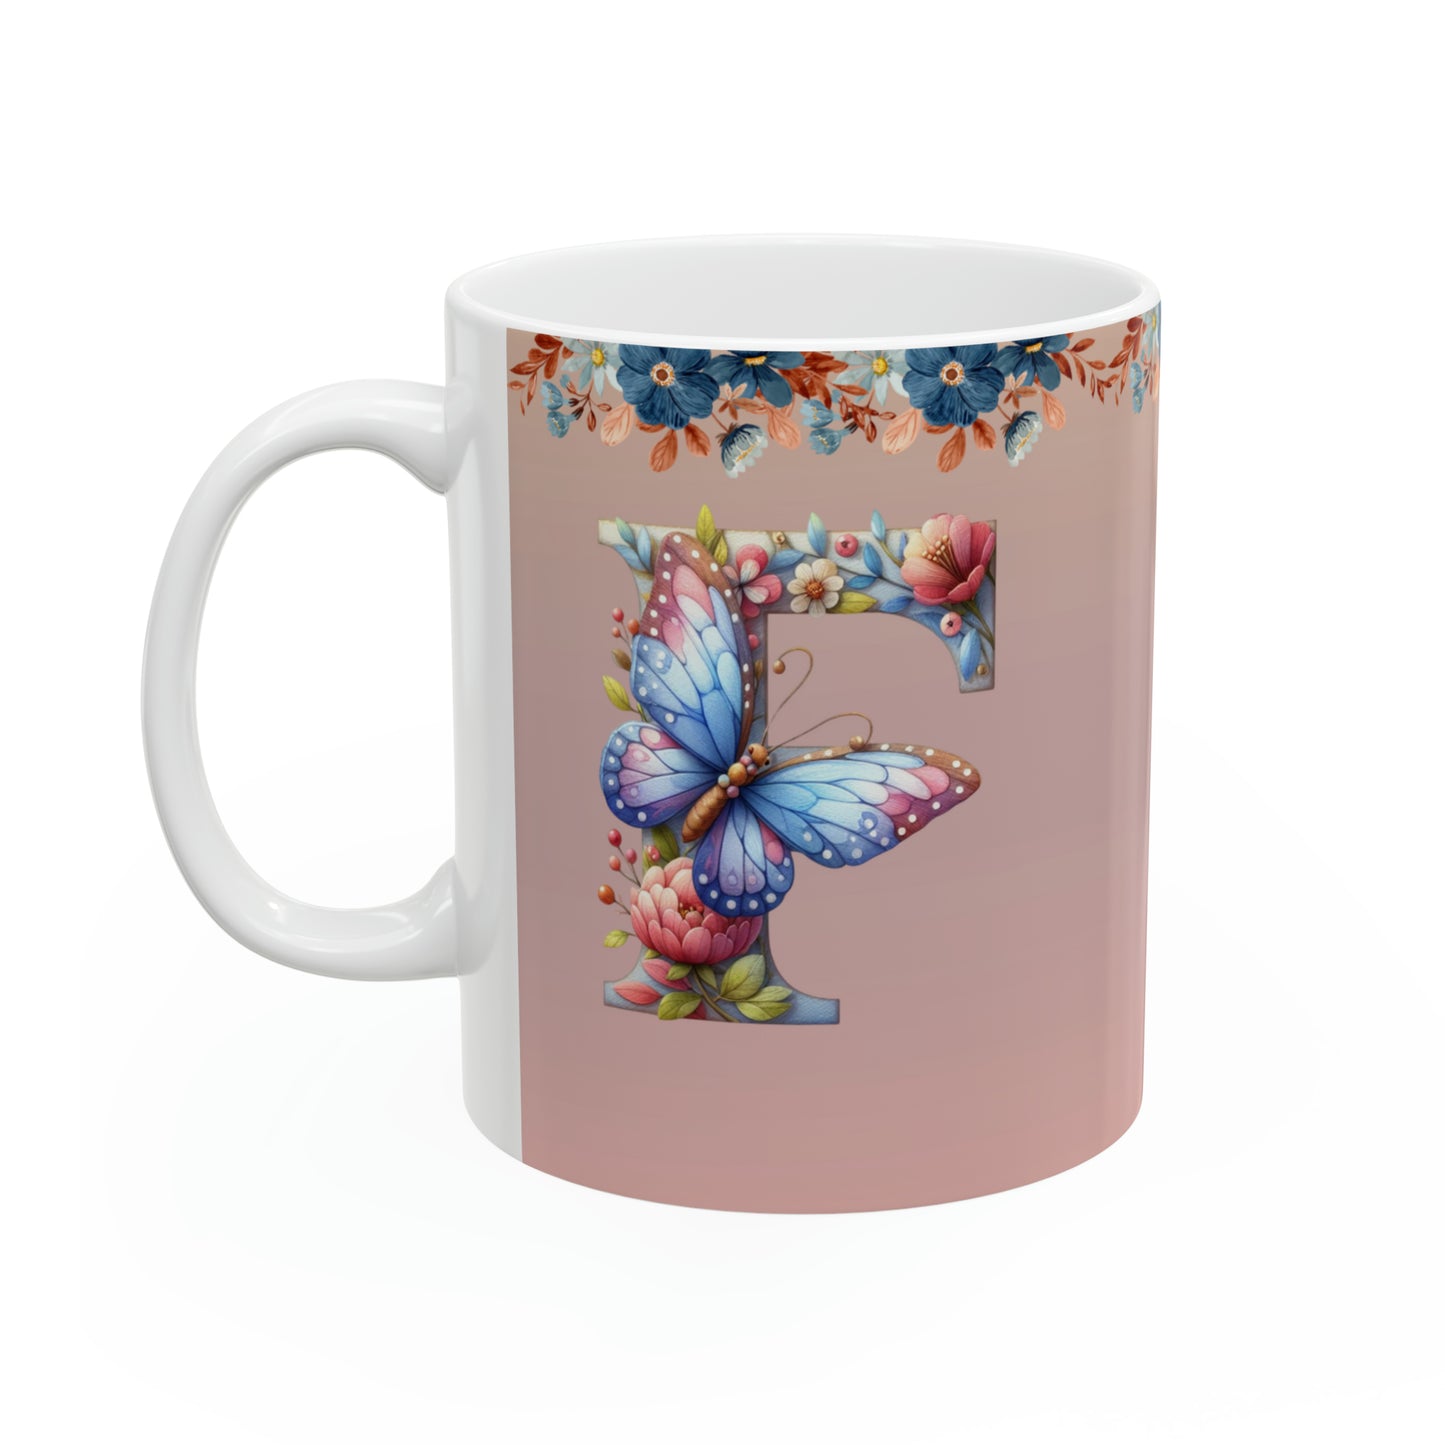 Fluttering into Spring: Fascinating Butterfly Letter F - Spring Mug